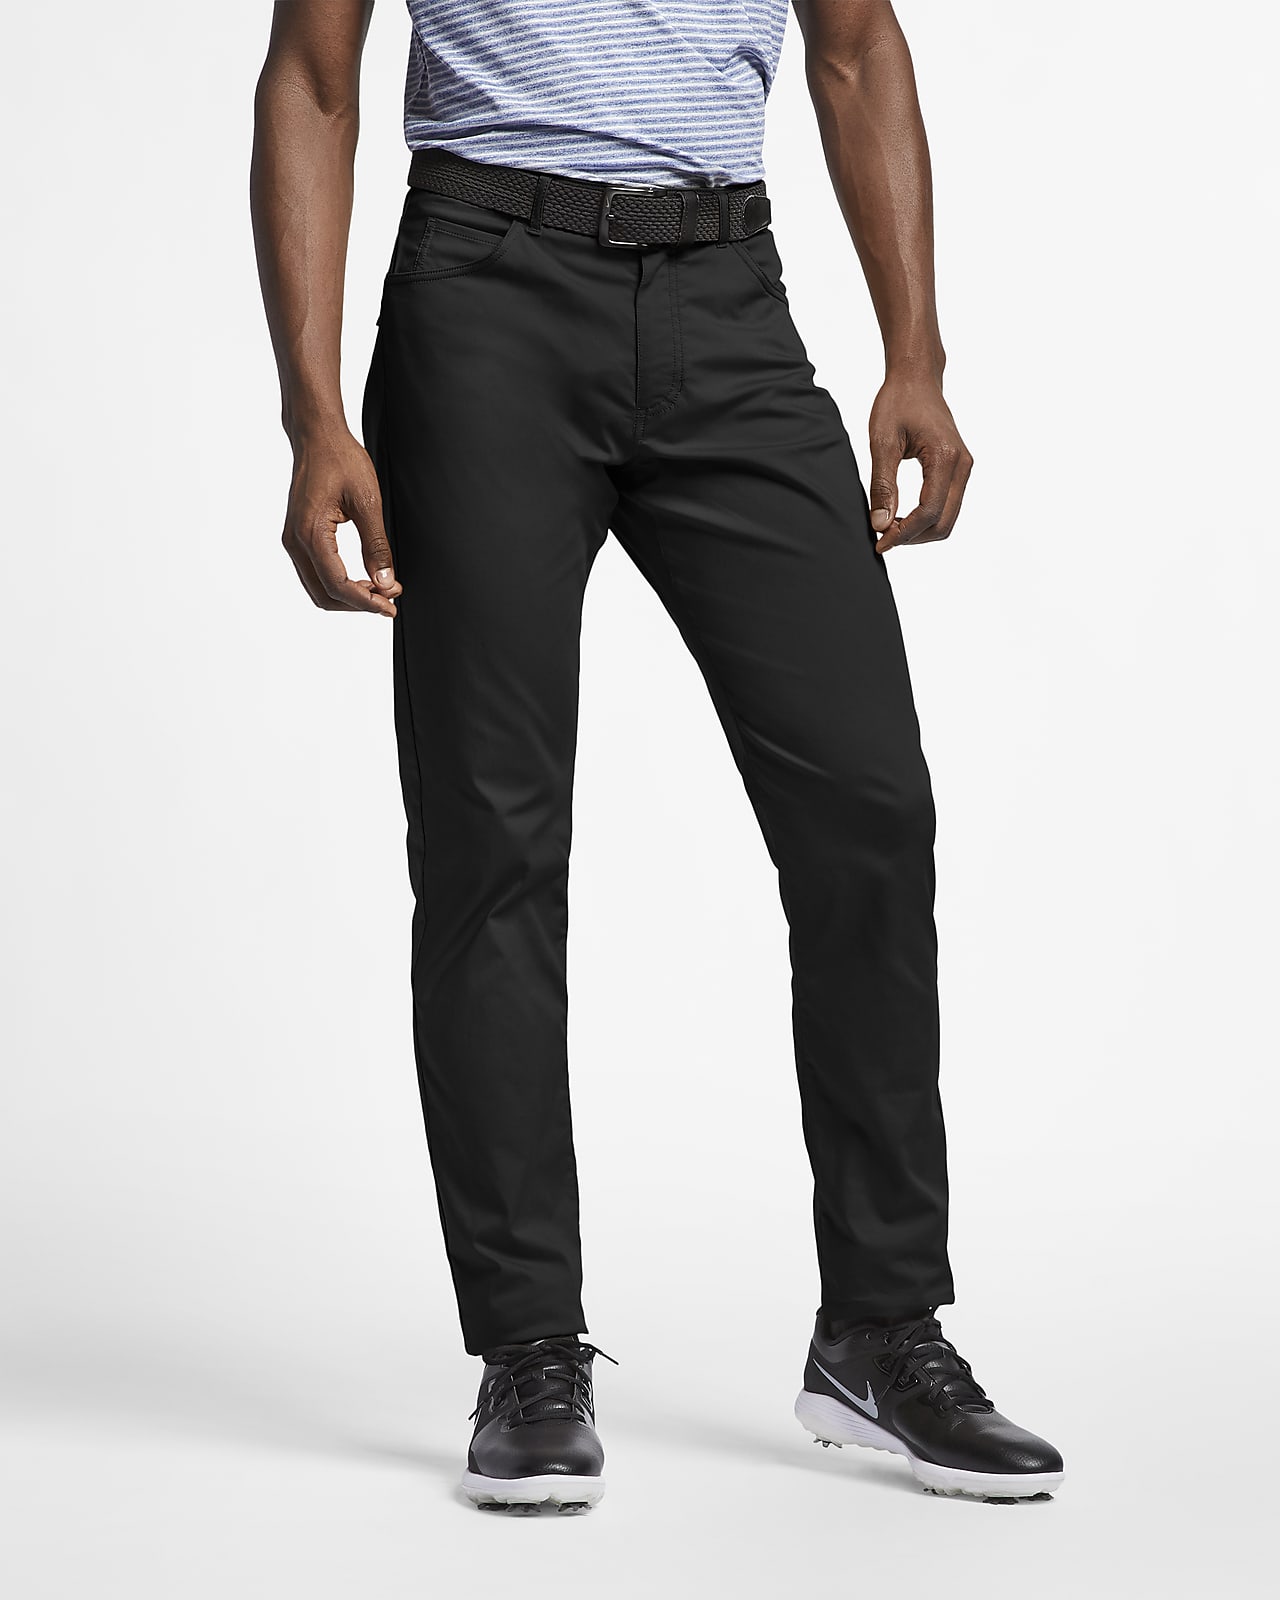 Nike Flex 5 Pocket Herren-Golfhose in 